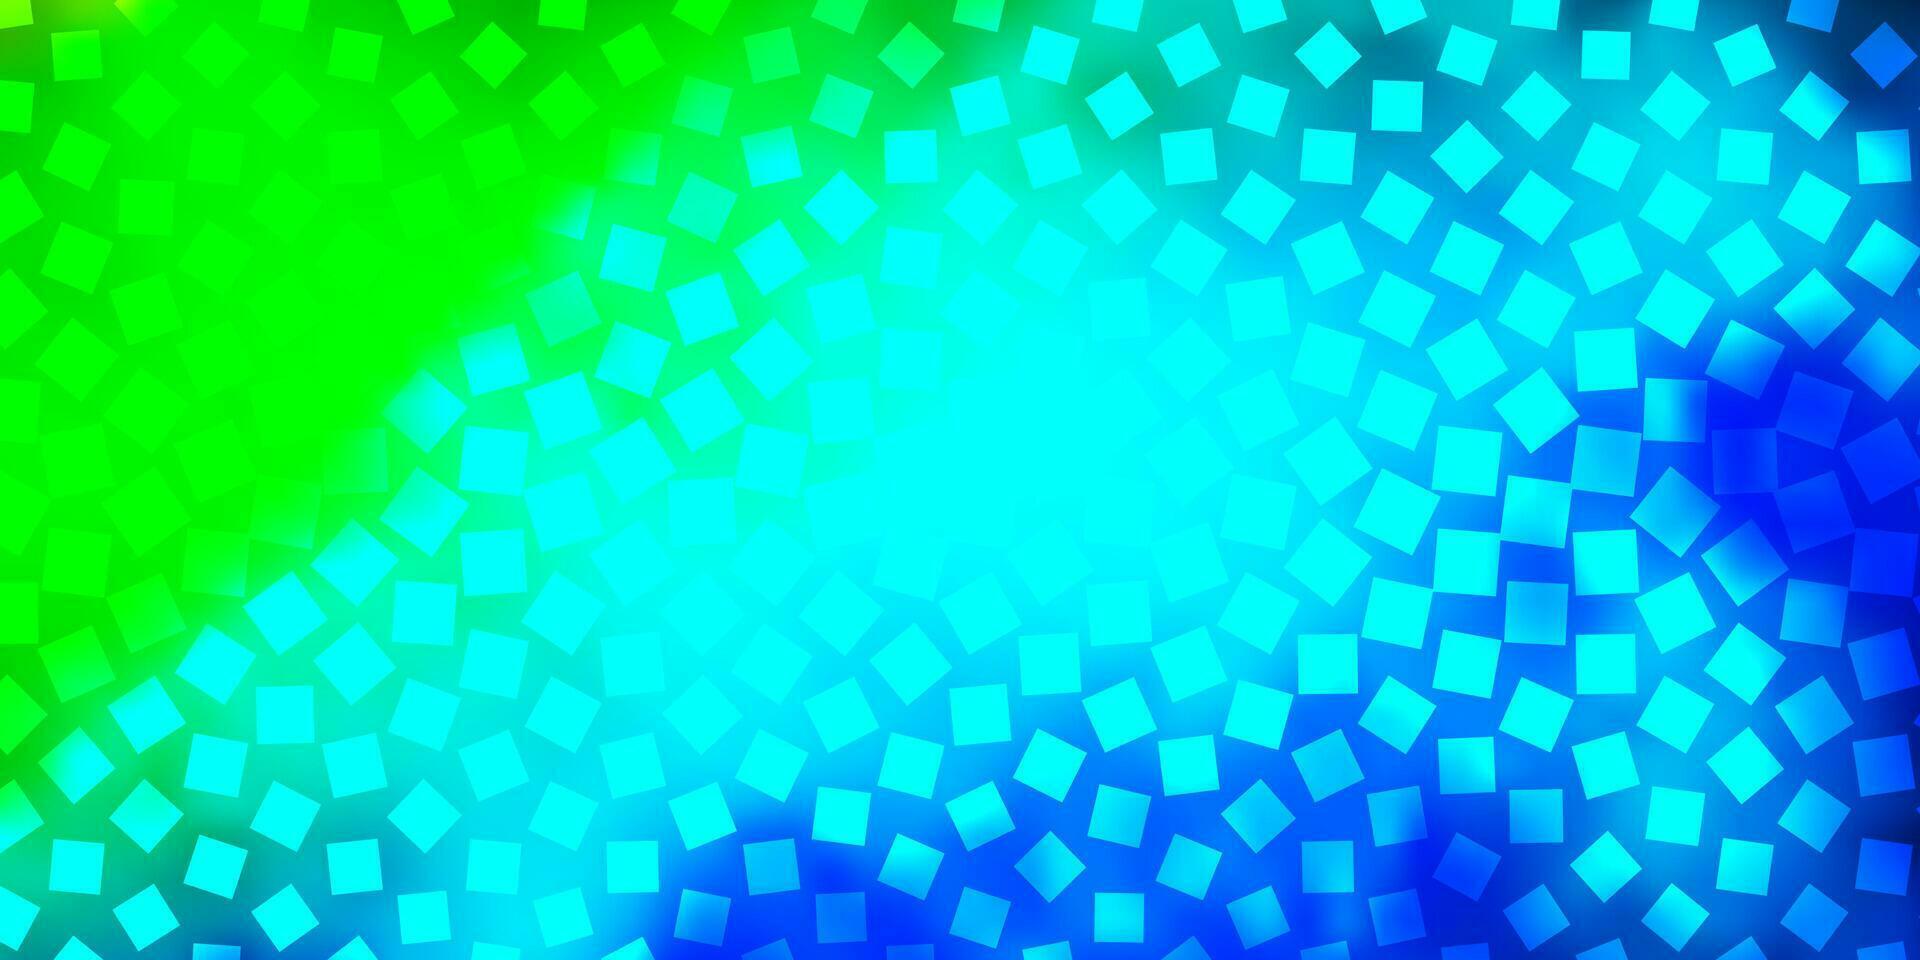 Light Blue, Green vector texture in rectangular style.